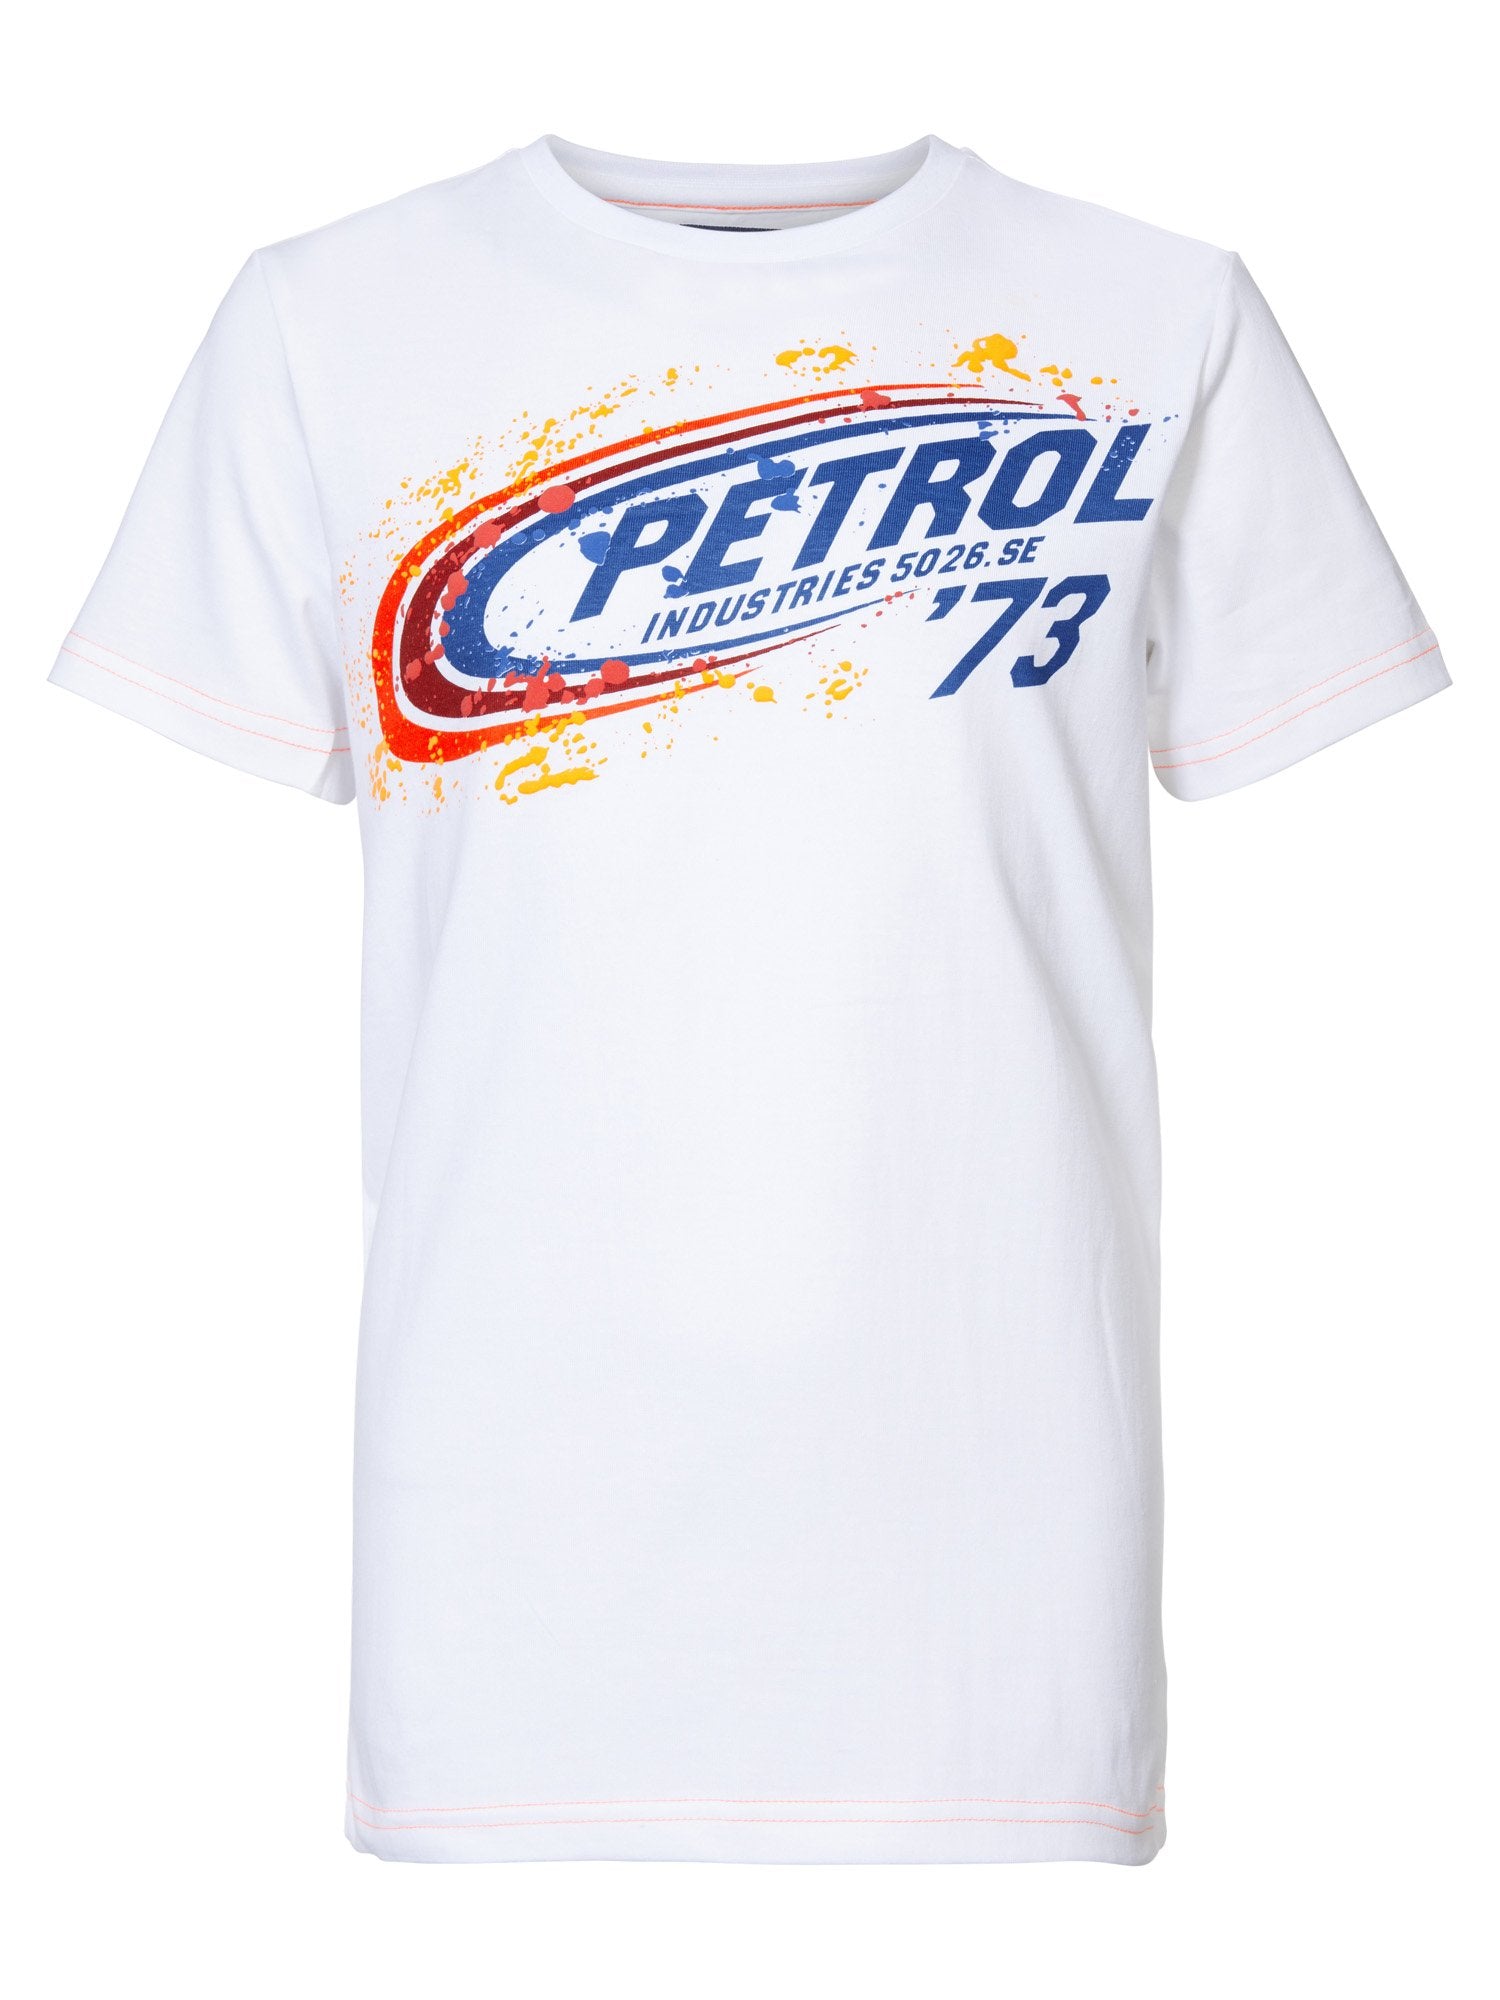 Jongens T-shirt Petrol '73 van Petrol Industries in de kleur Bright White in maat 176.